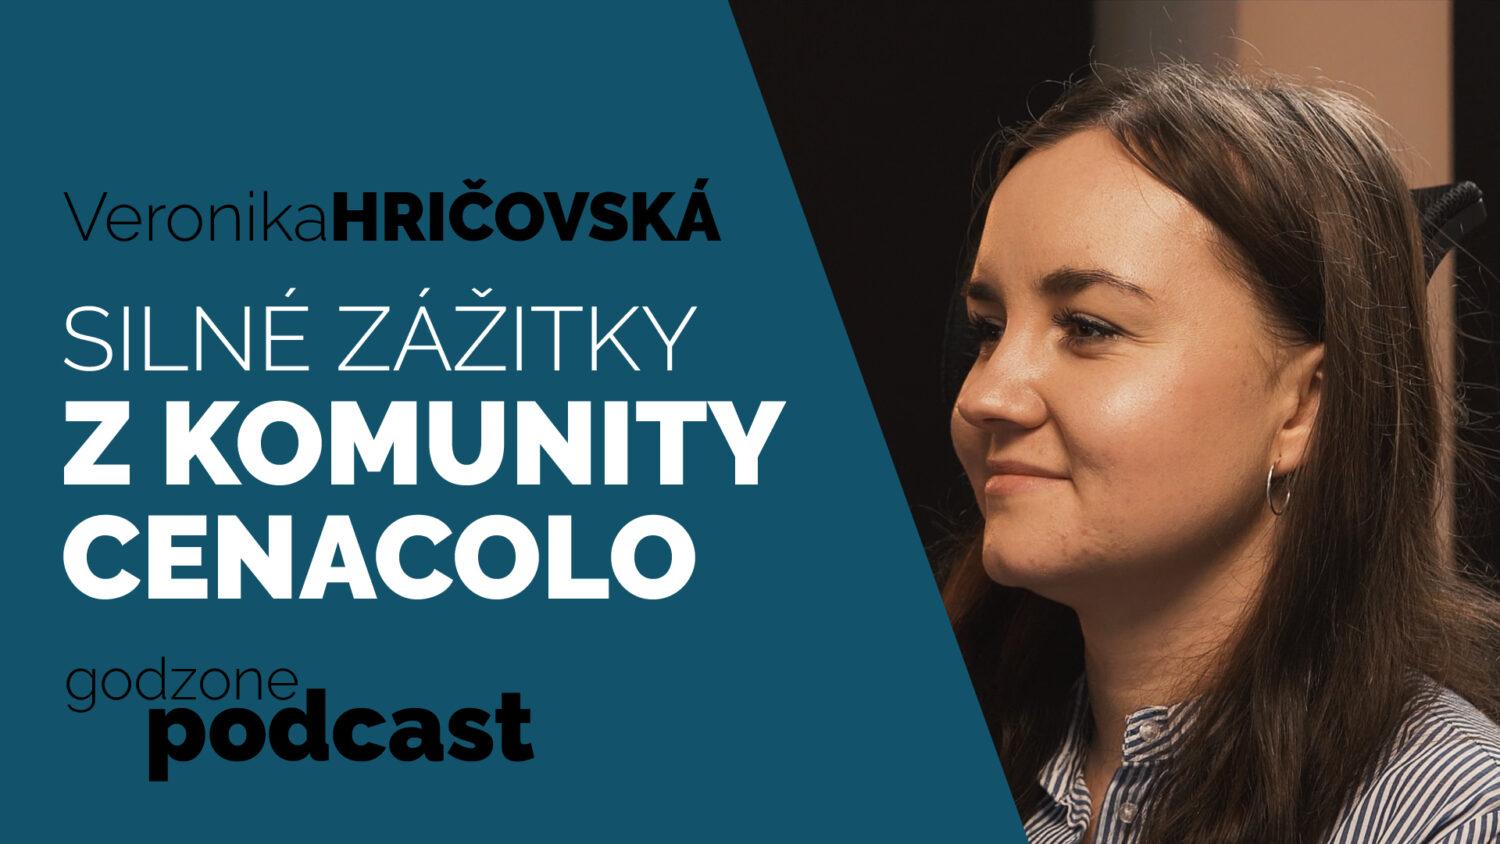 Veronika Hričovská: Silné zážitky z komunity Cenacolo | Godzone podcast